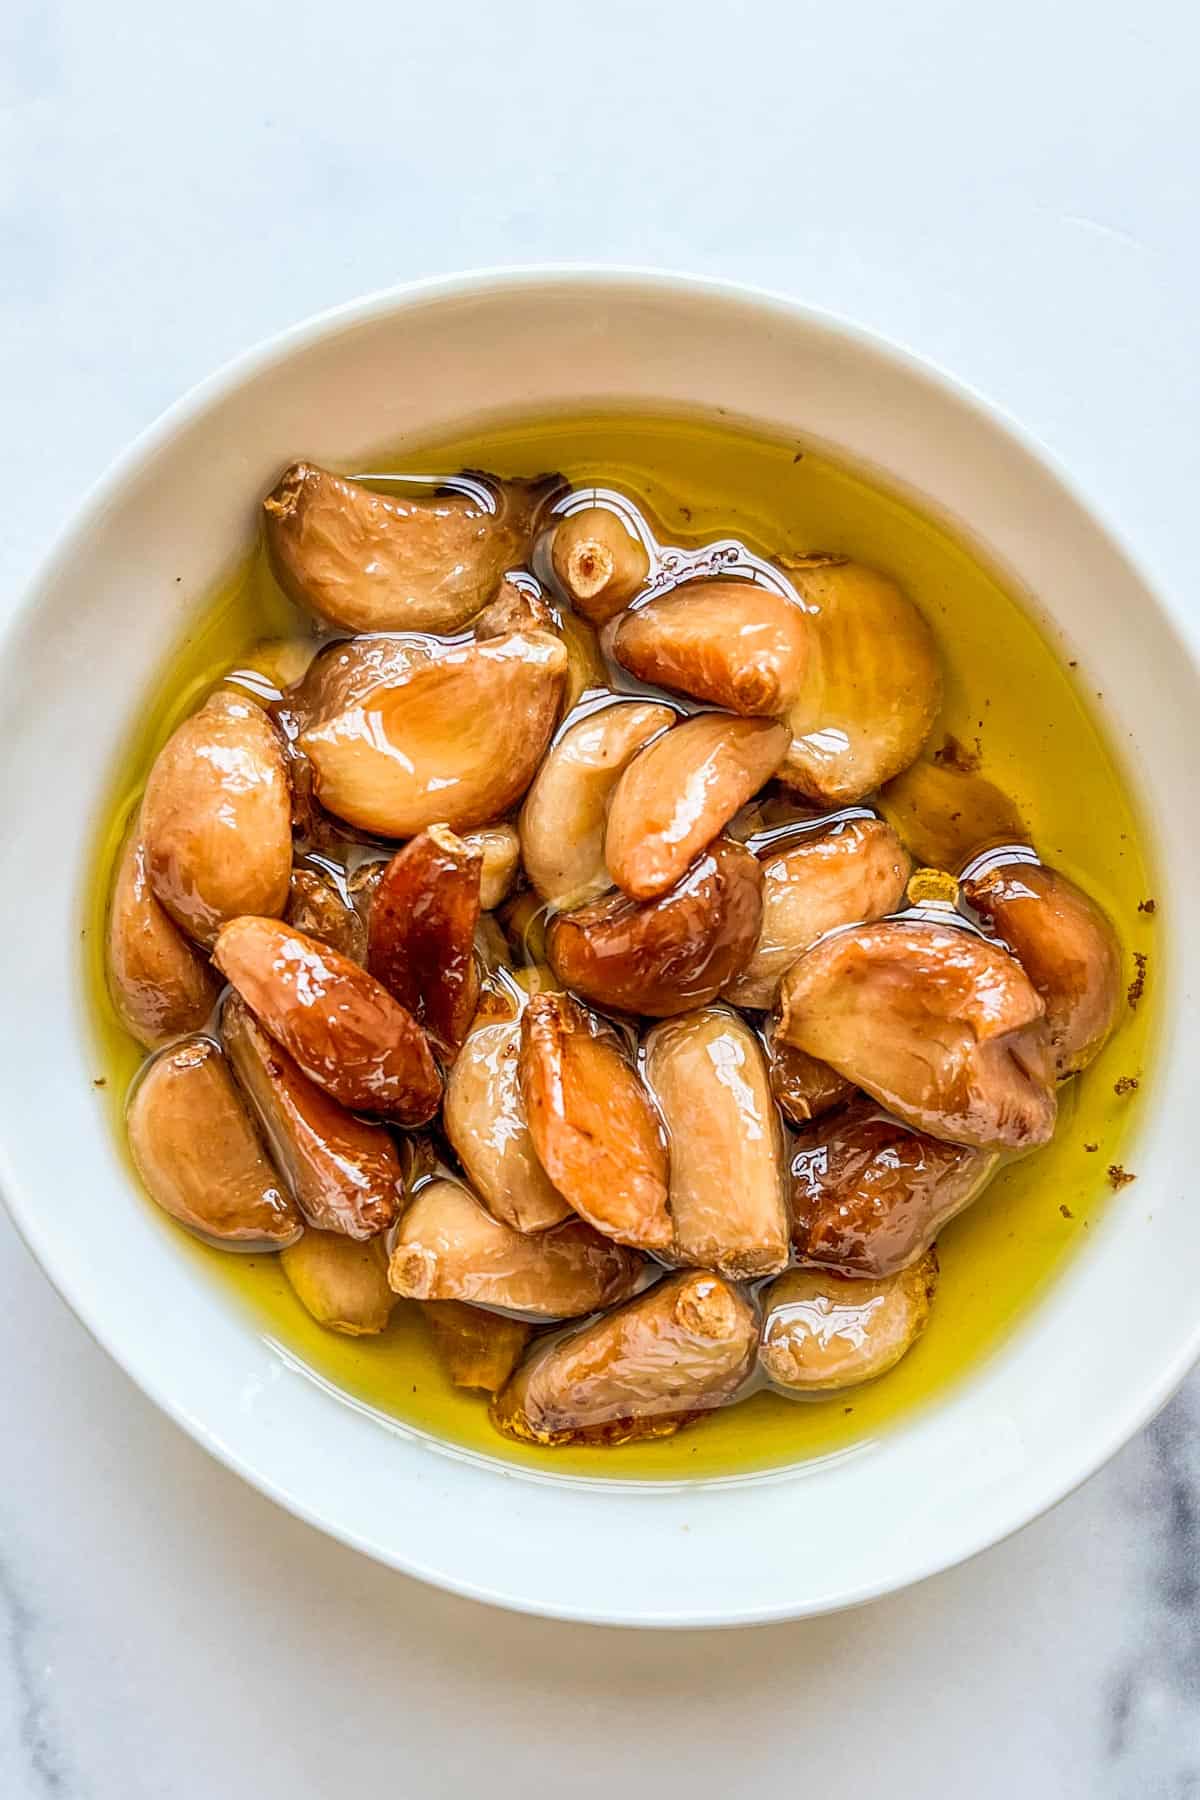 Garlic confit in oil in a white bowl.